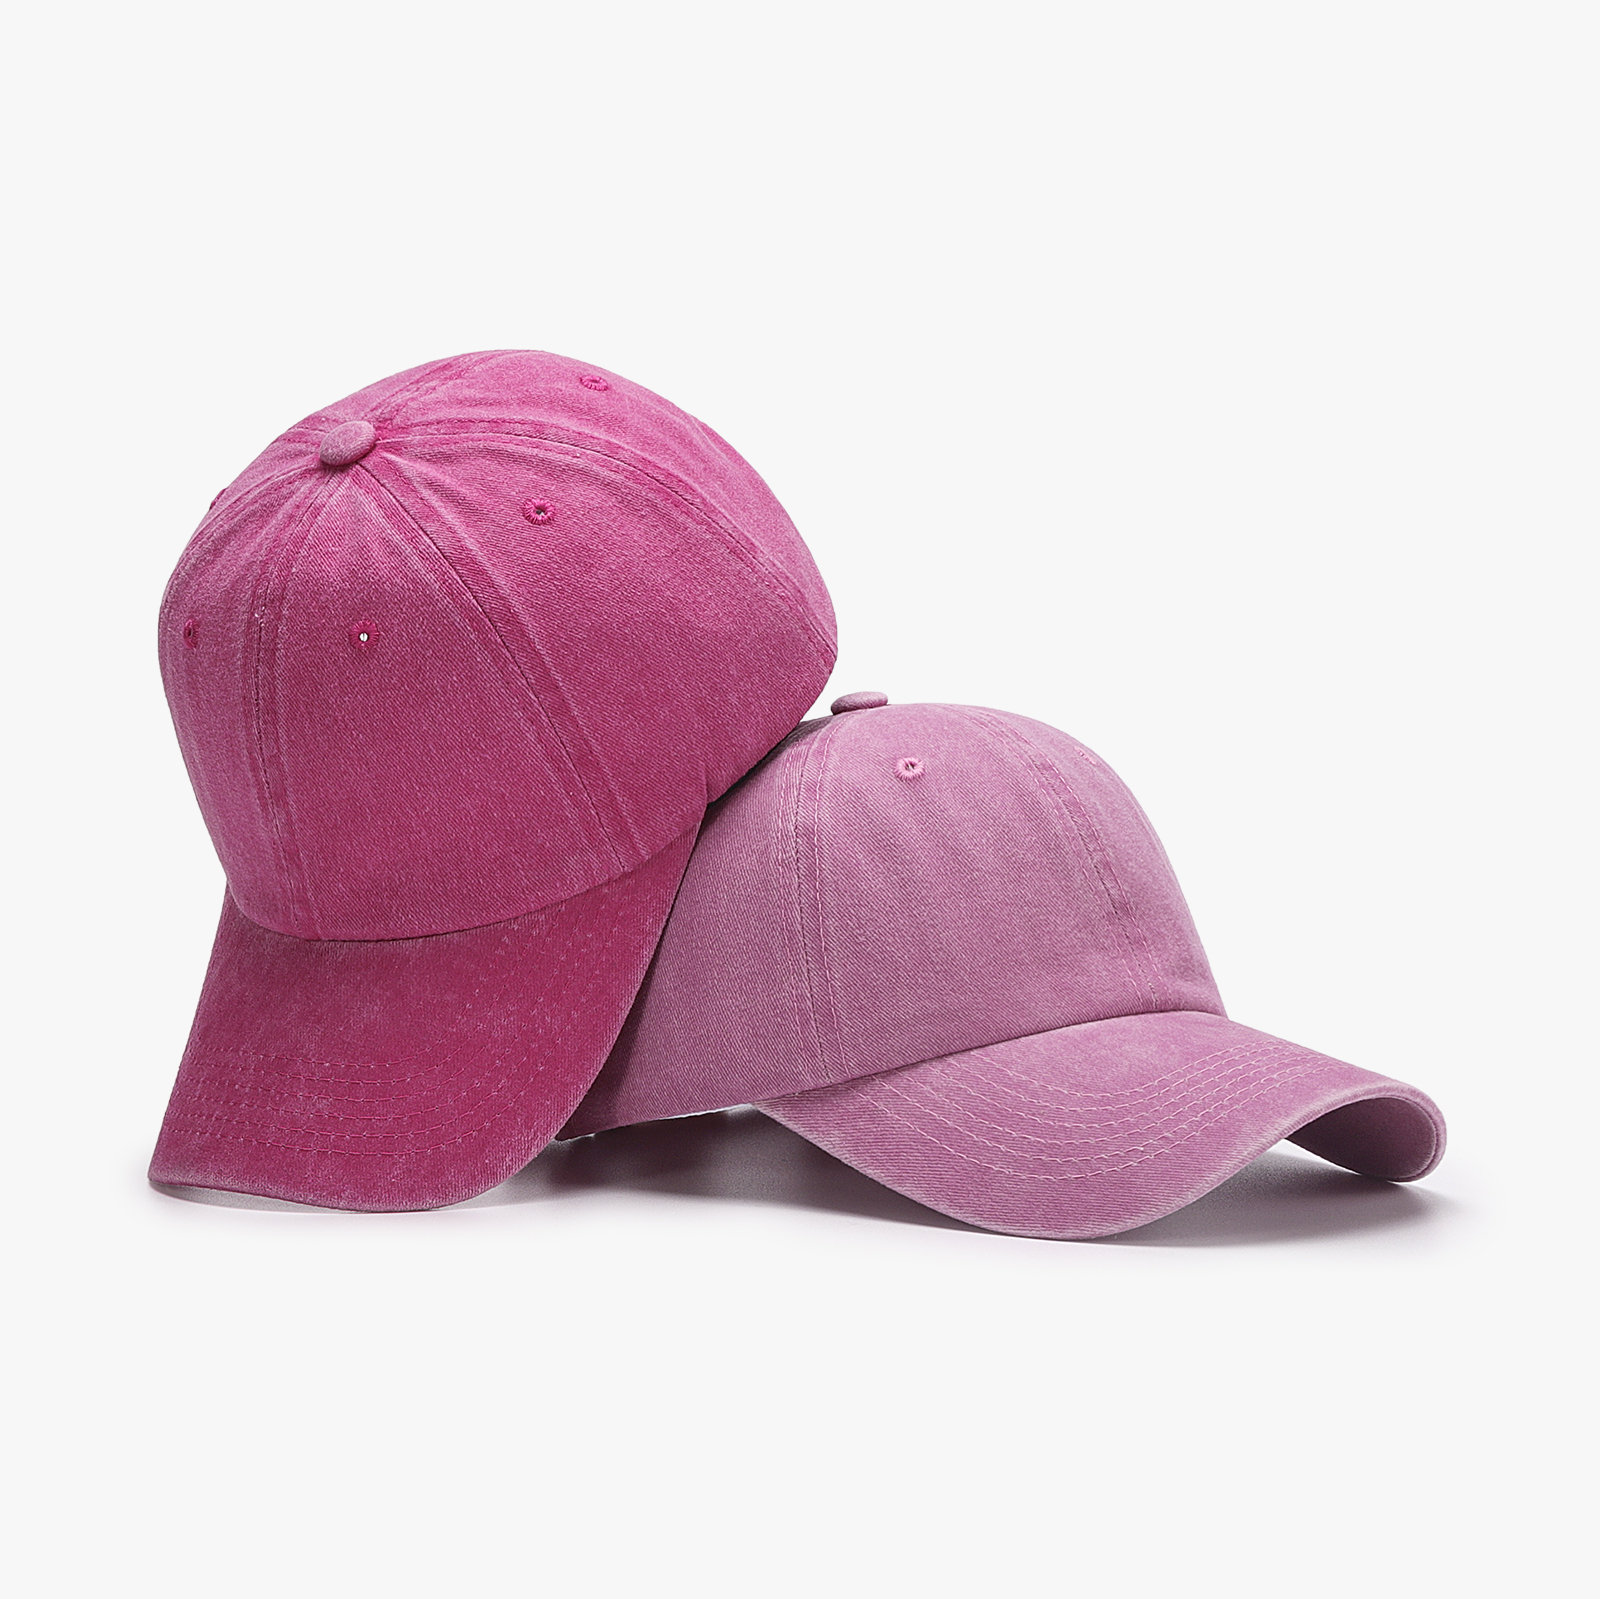 Plain Low Profile Cotton Baseball Cap- Hot Pink